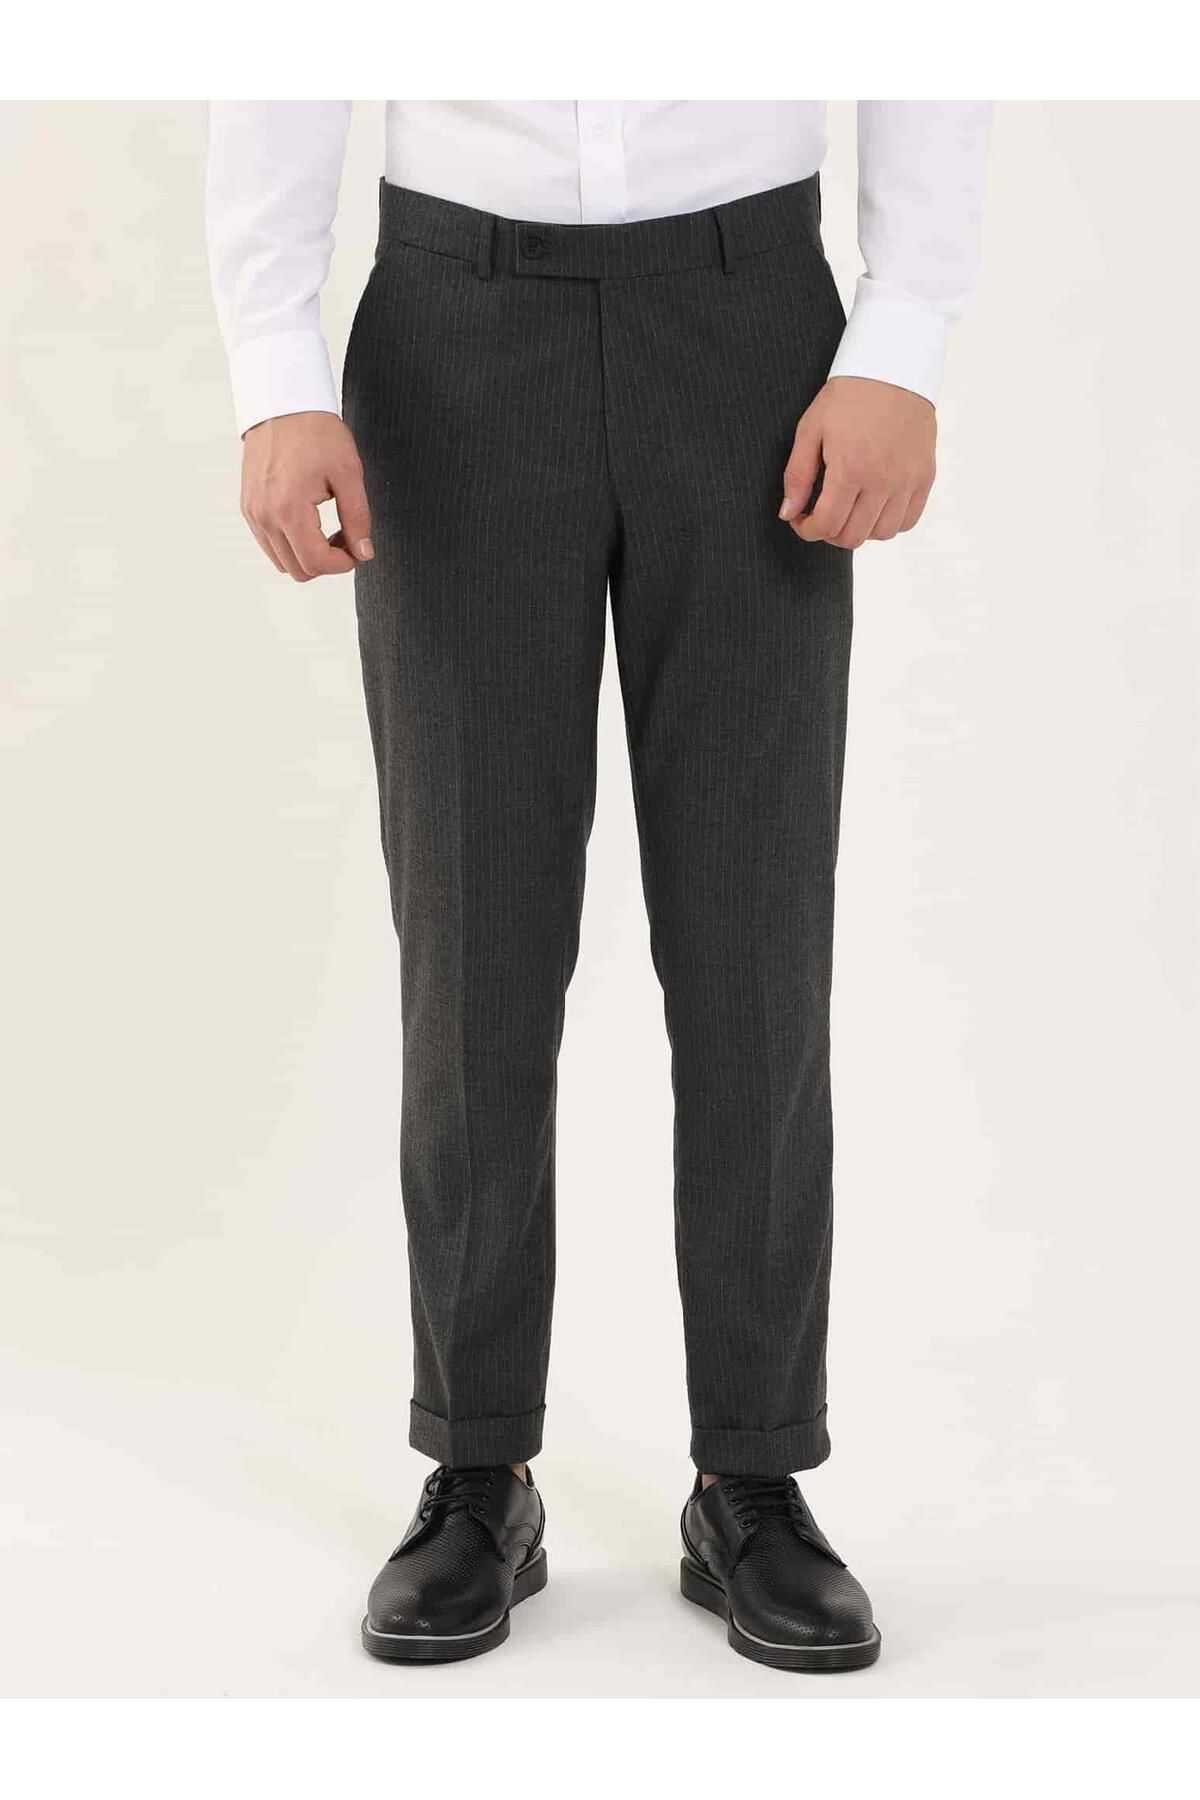 Dufy Koyu Gri Erkek Slim Fit Çizgili Klasik Pantolon - 97615